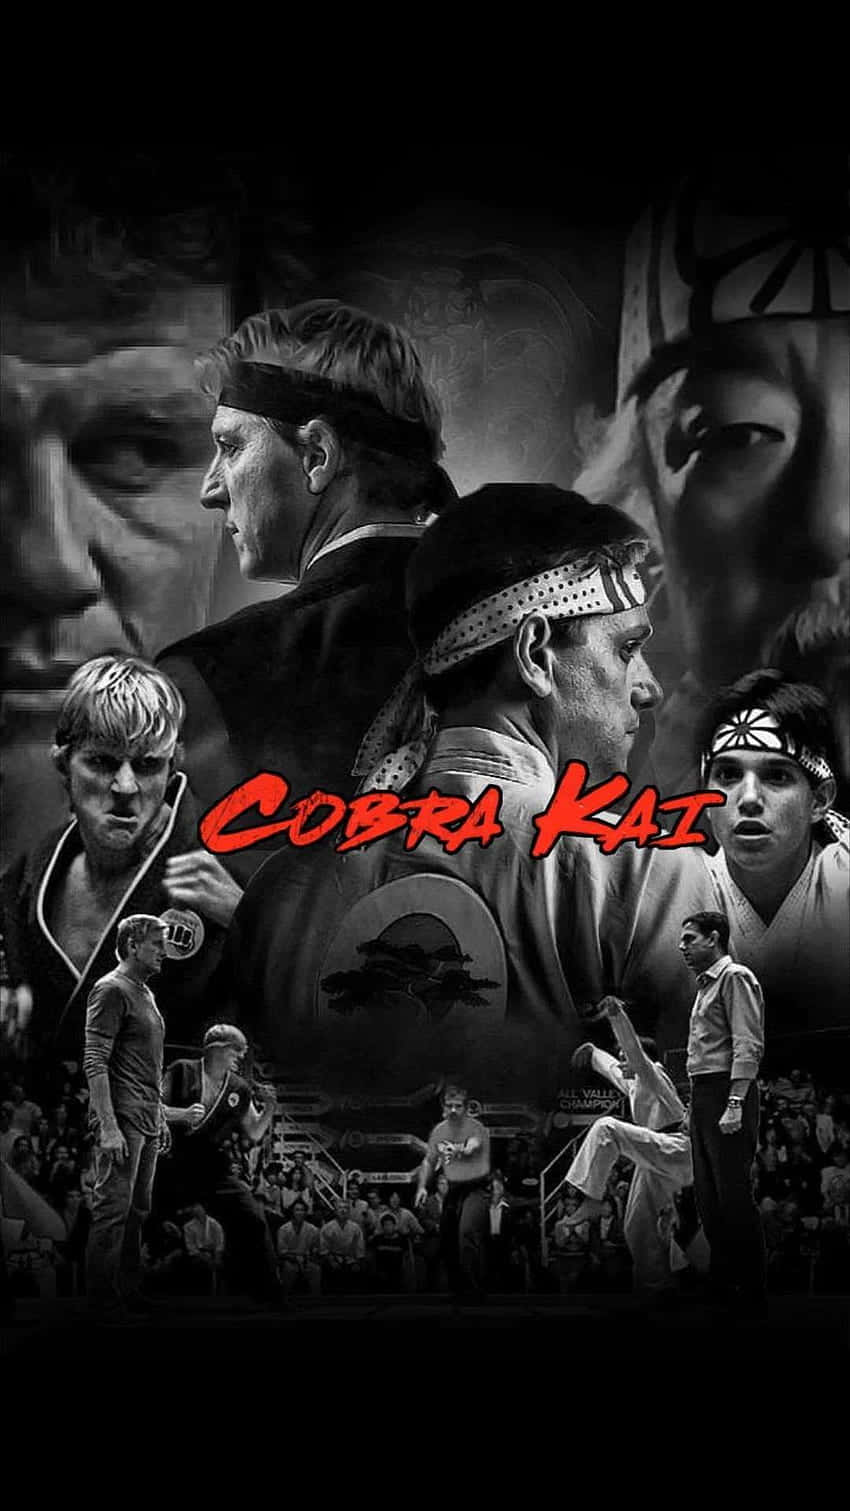 Cobrakai Plano De Fundo Do Karate Kid Para Iphone Xr.